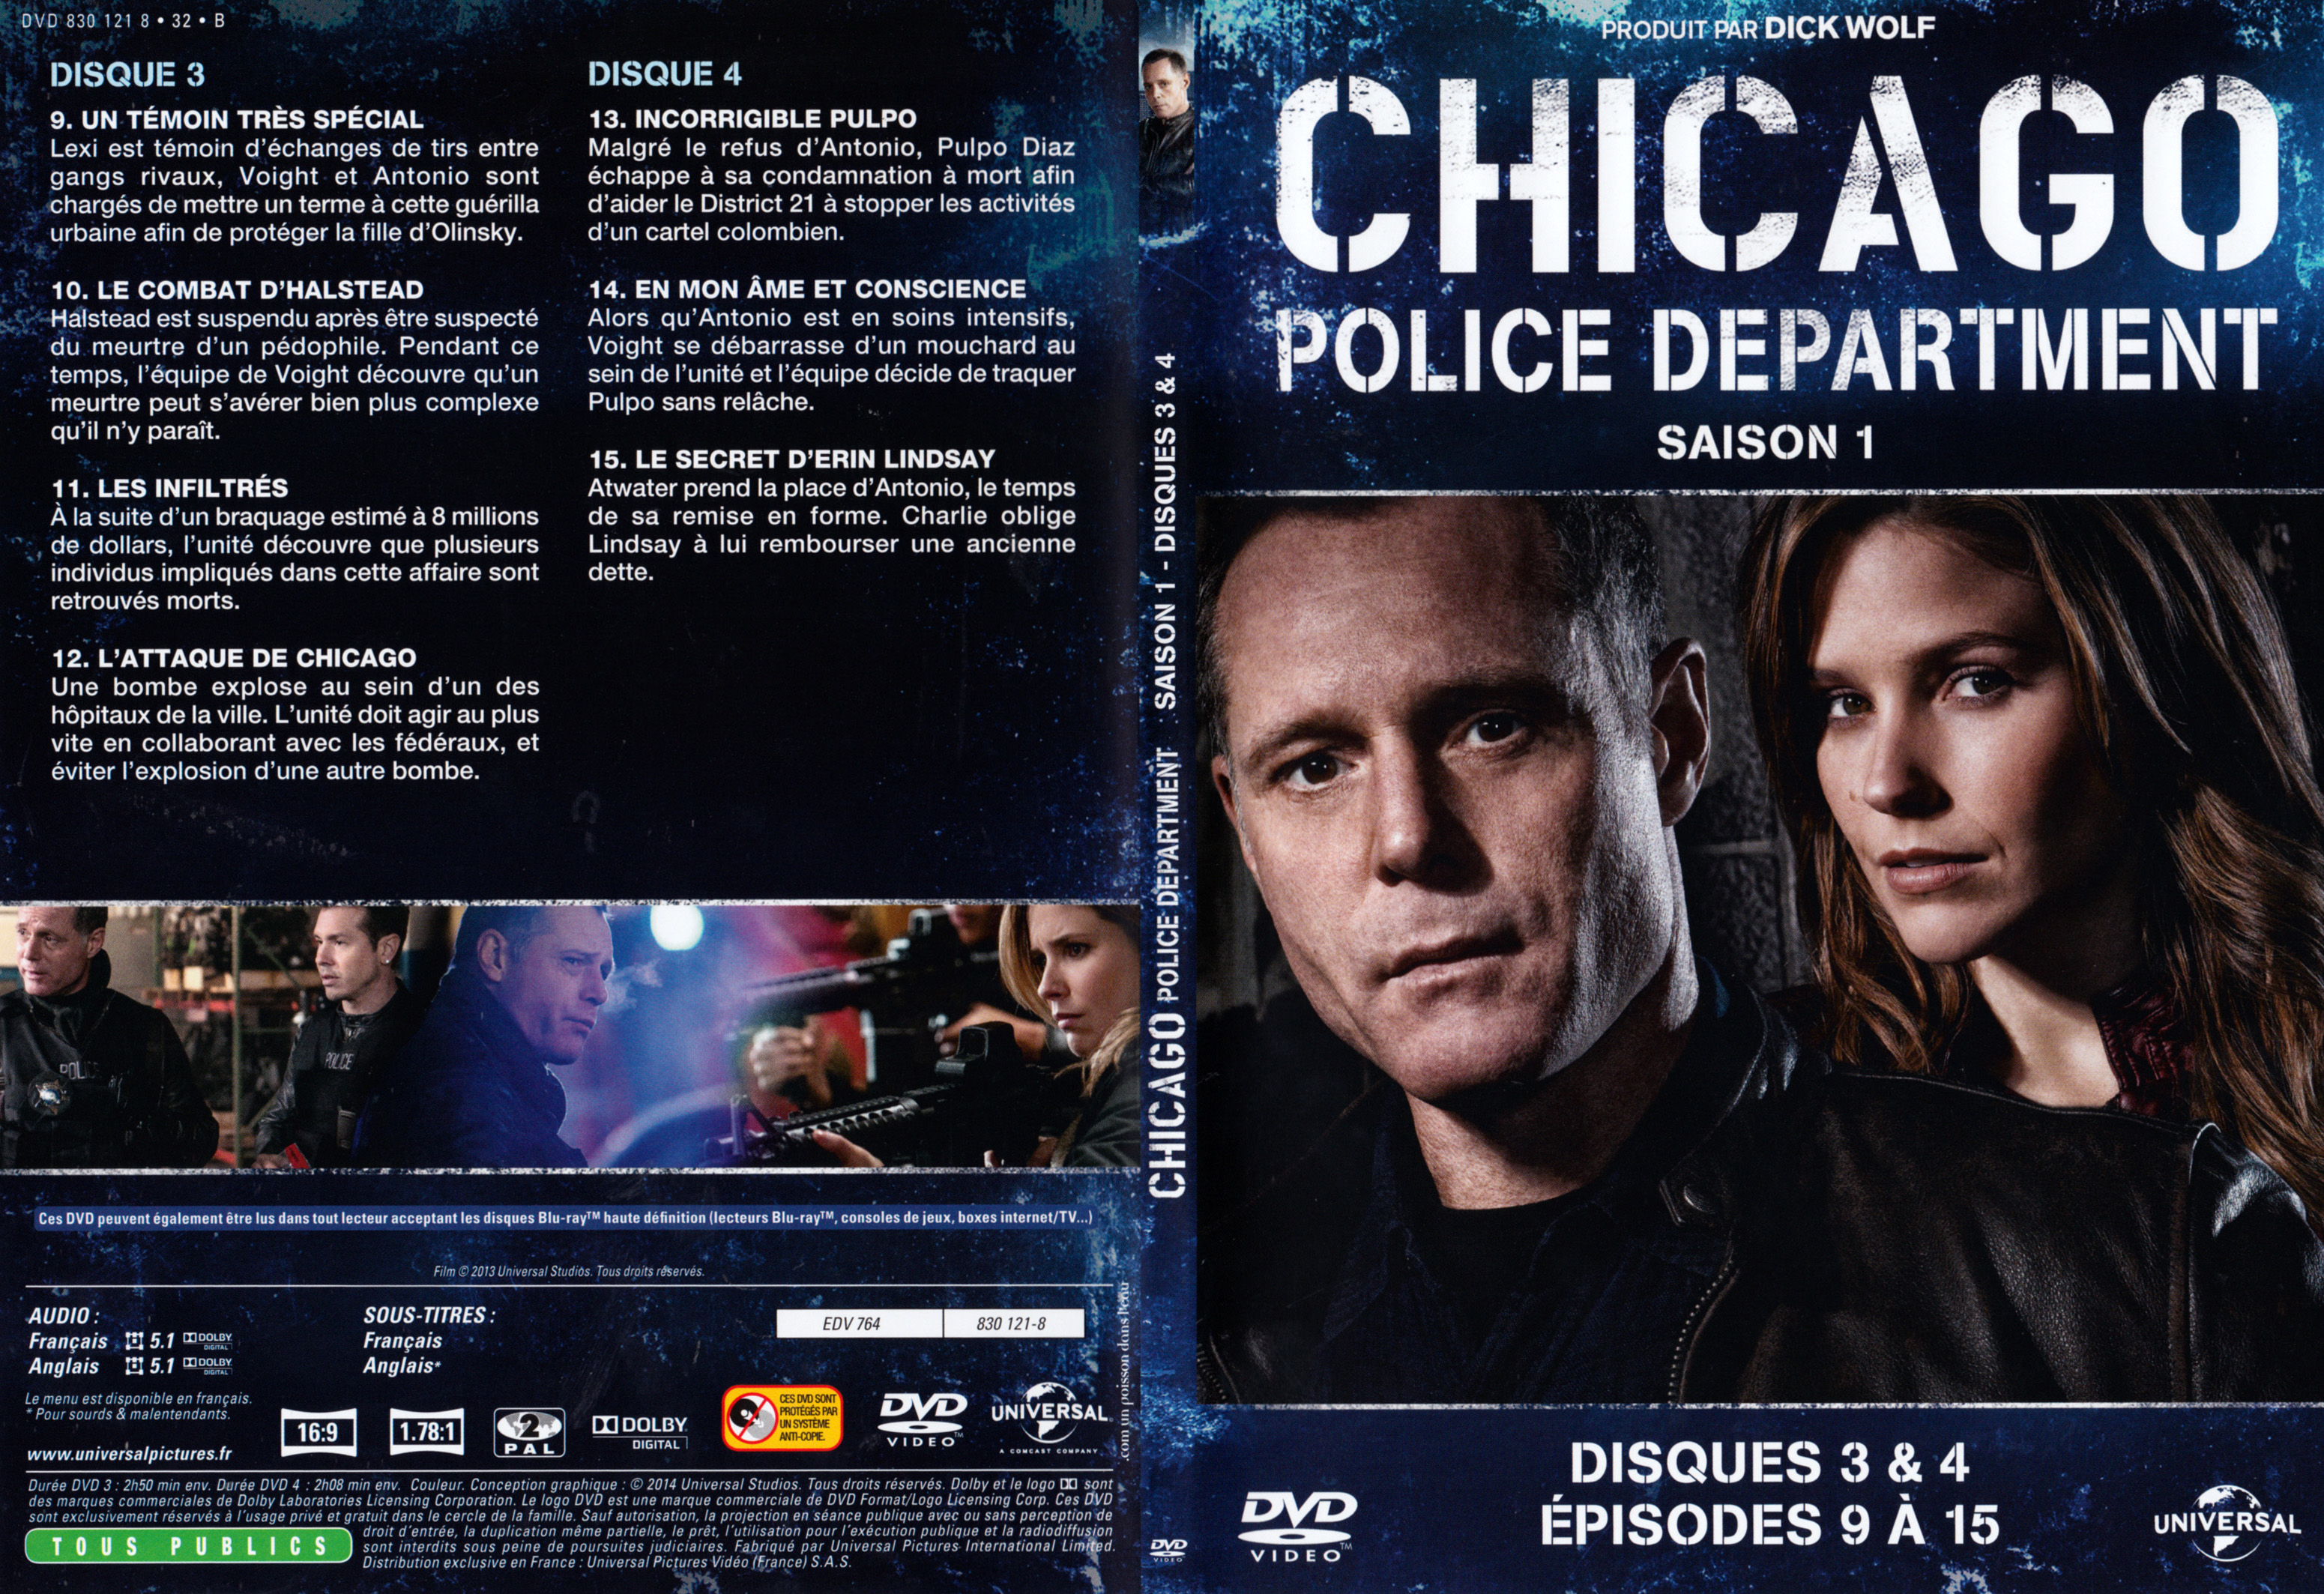 Jaquette DVD Chicago Police Department Saison 1 DISC 2